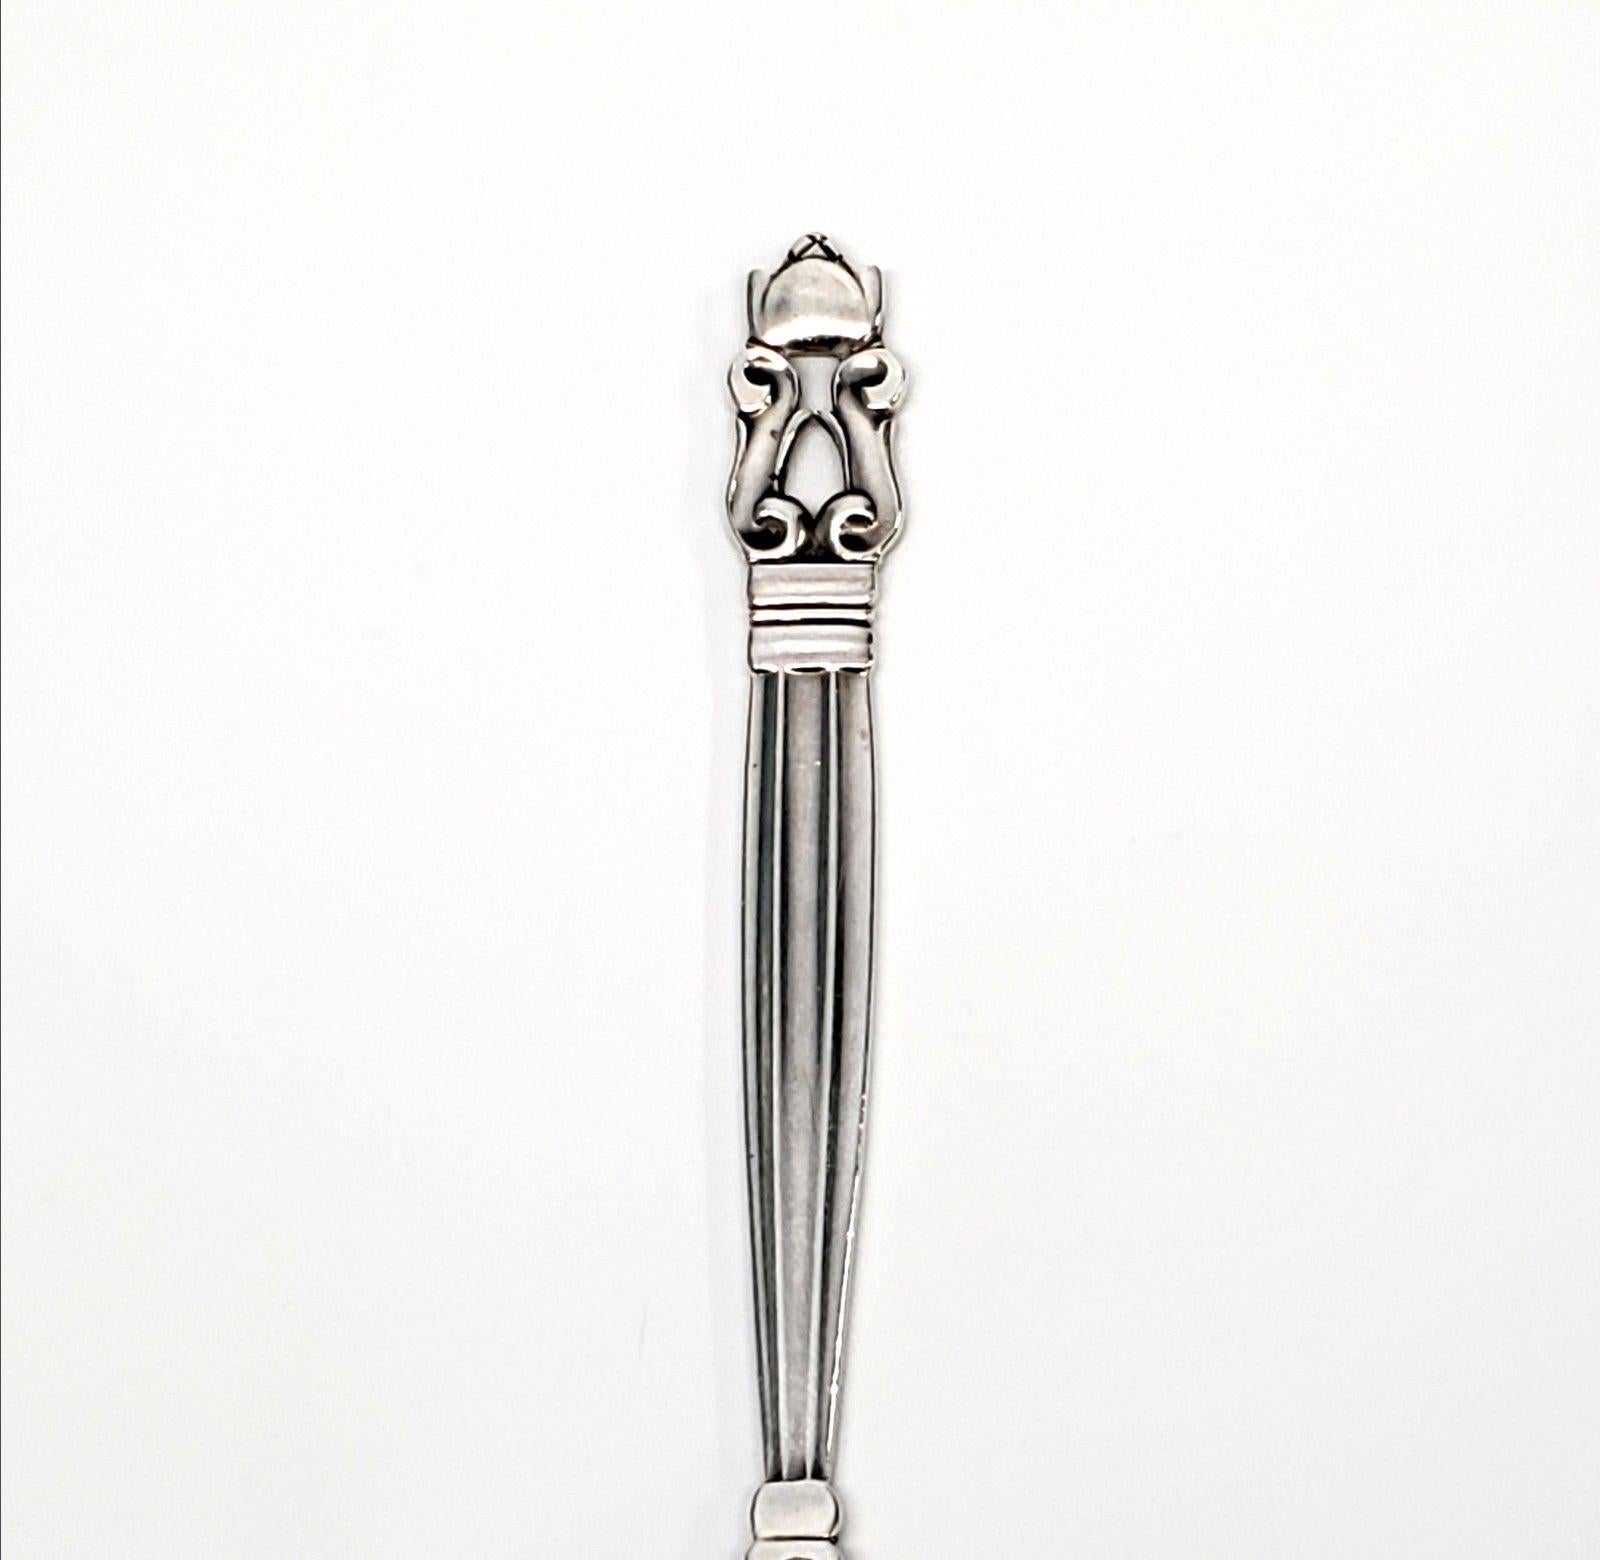 Georg Jensen sterling silver medium teaspoon in the Acorn pattern. 
Marked: GJ DENMARK STERLING. 
Measures: 5 3/4